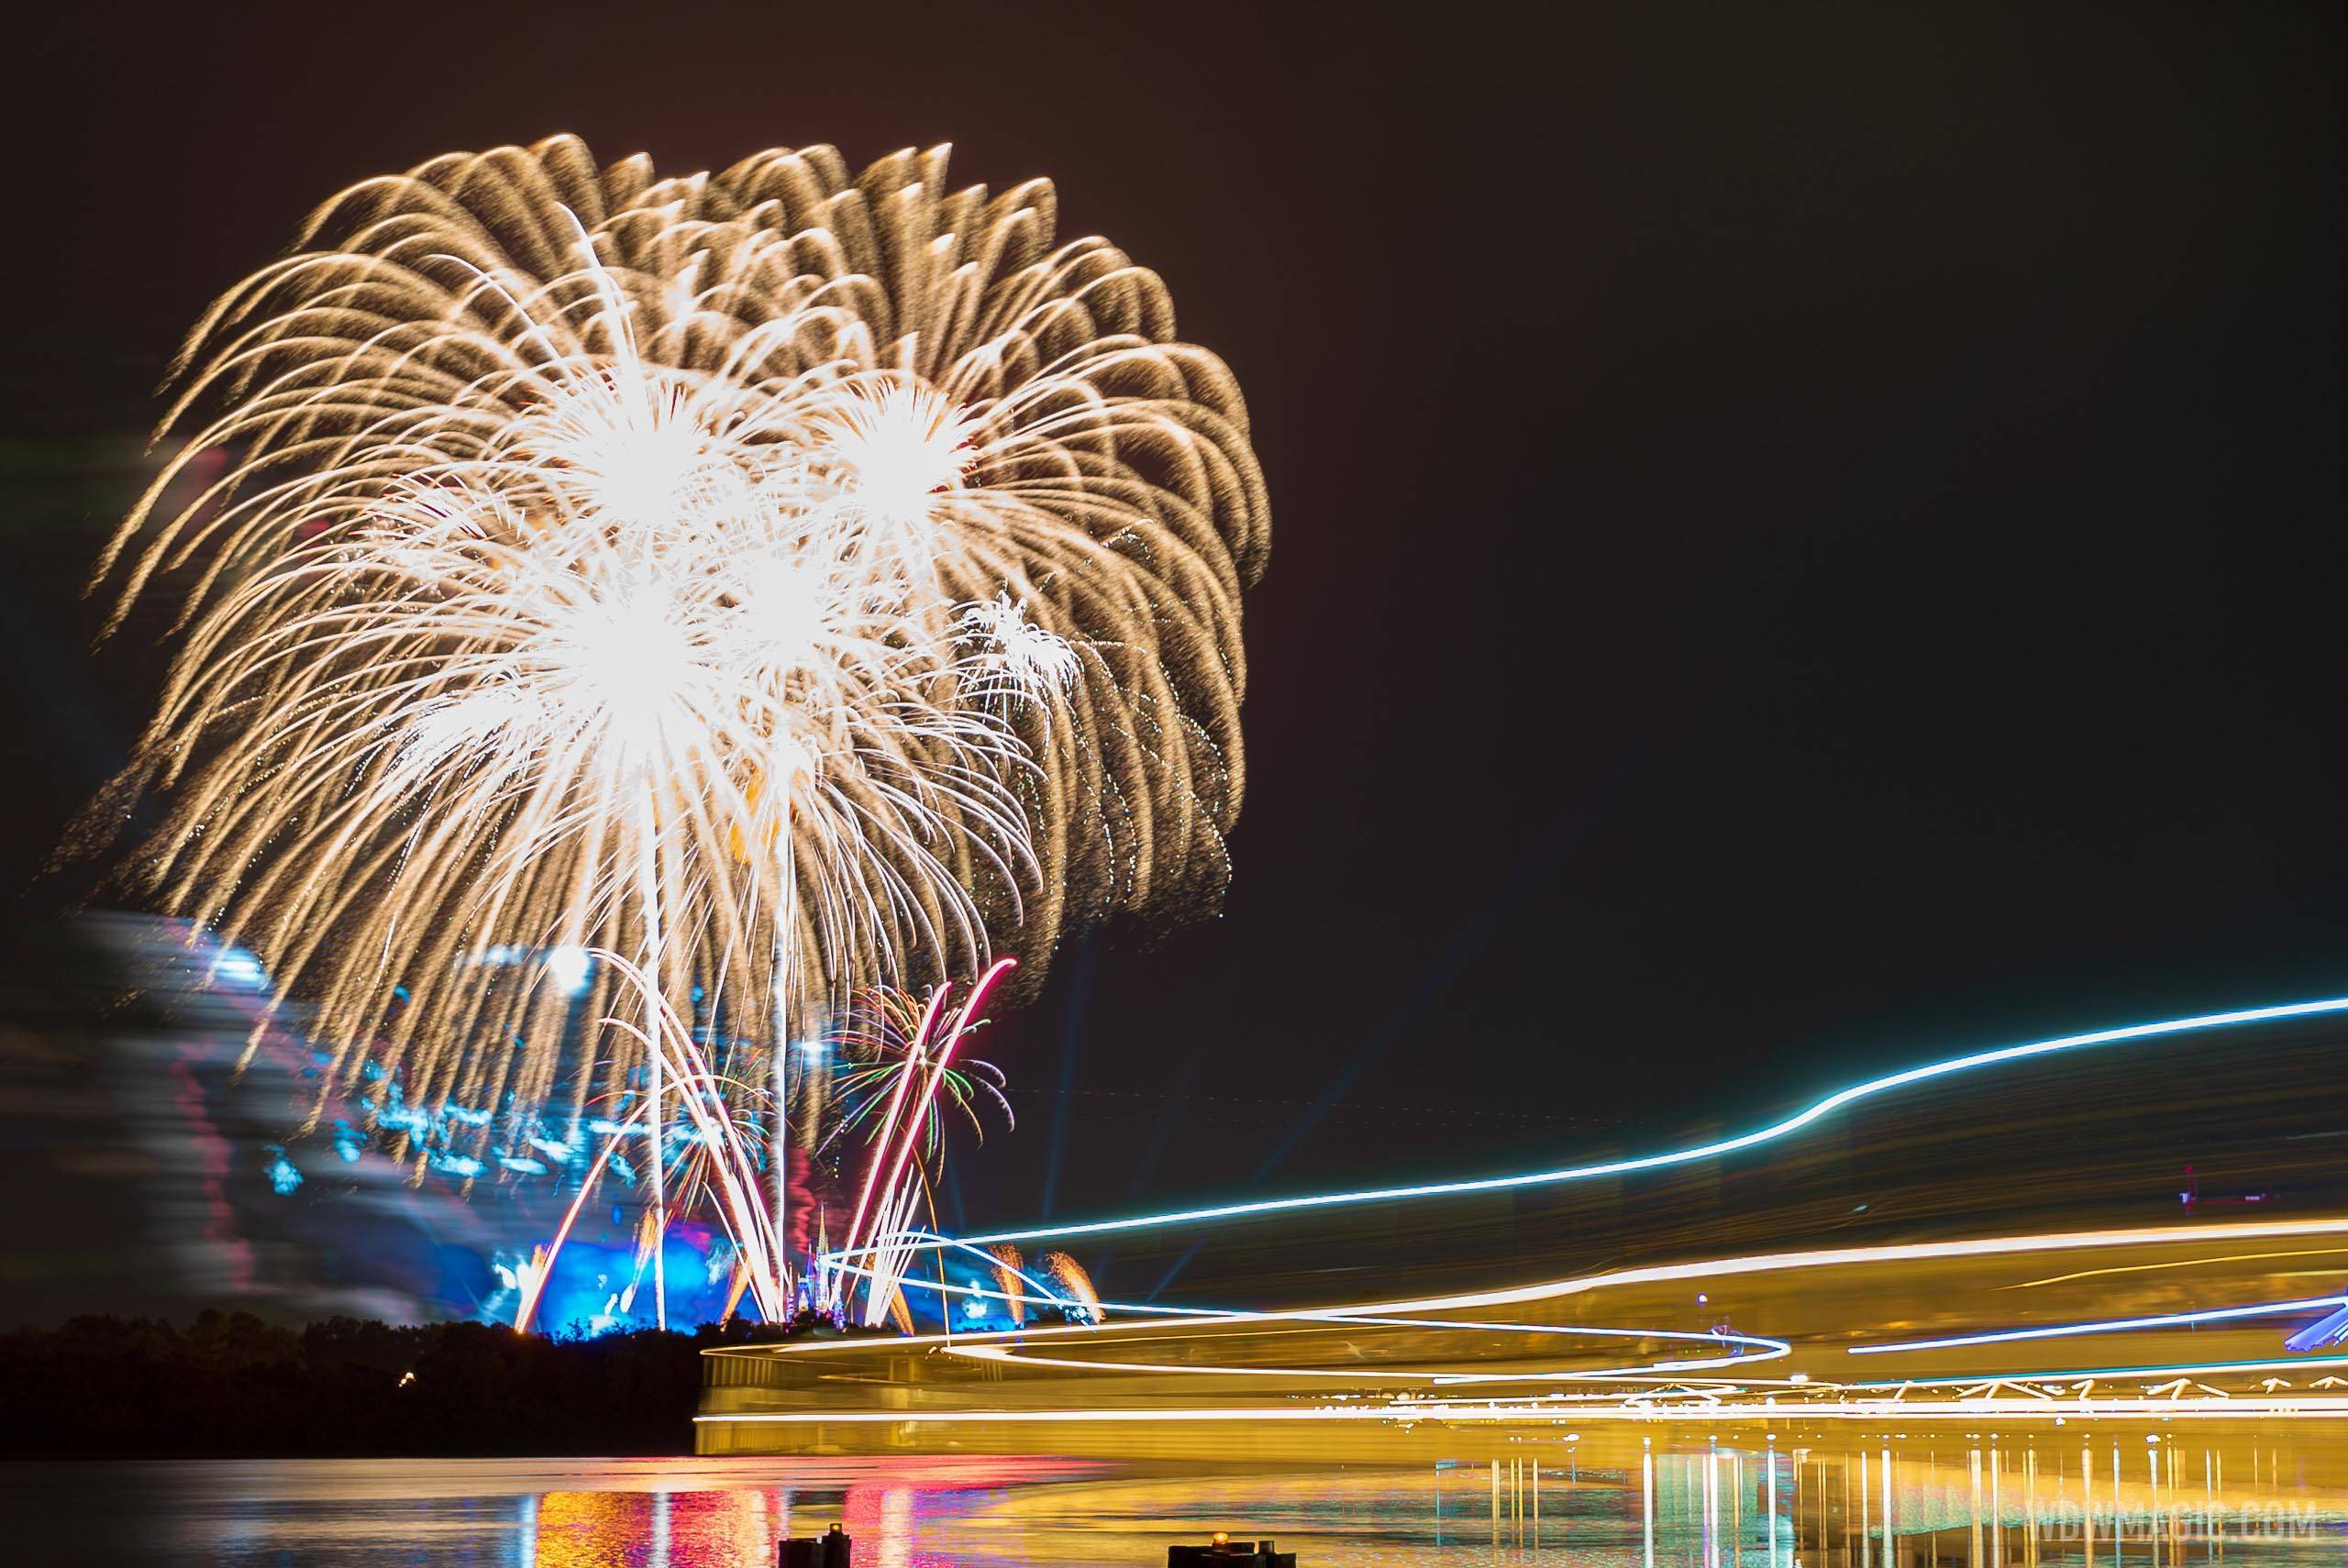 Ferrytale Fireworks - A Sparking Dessert Cruise returns to the Seven Seas Lagoon